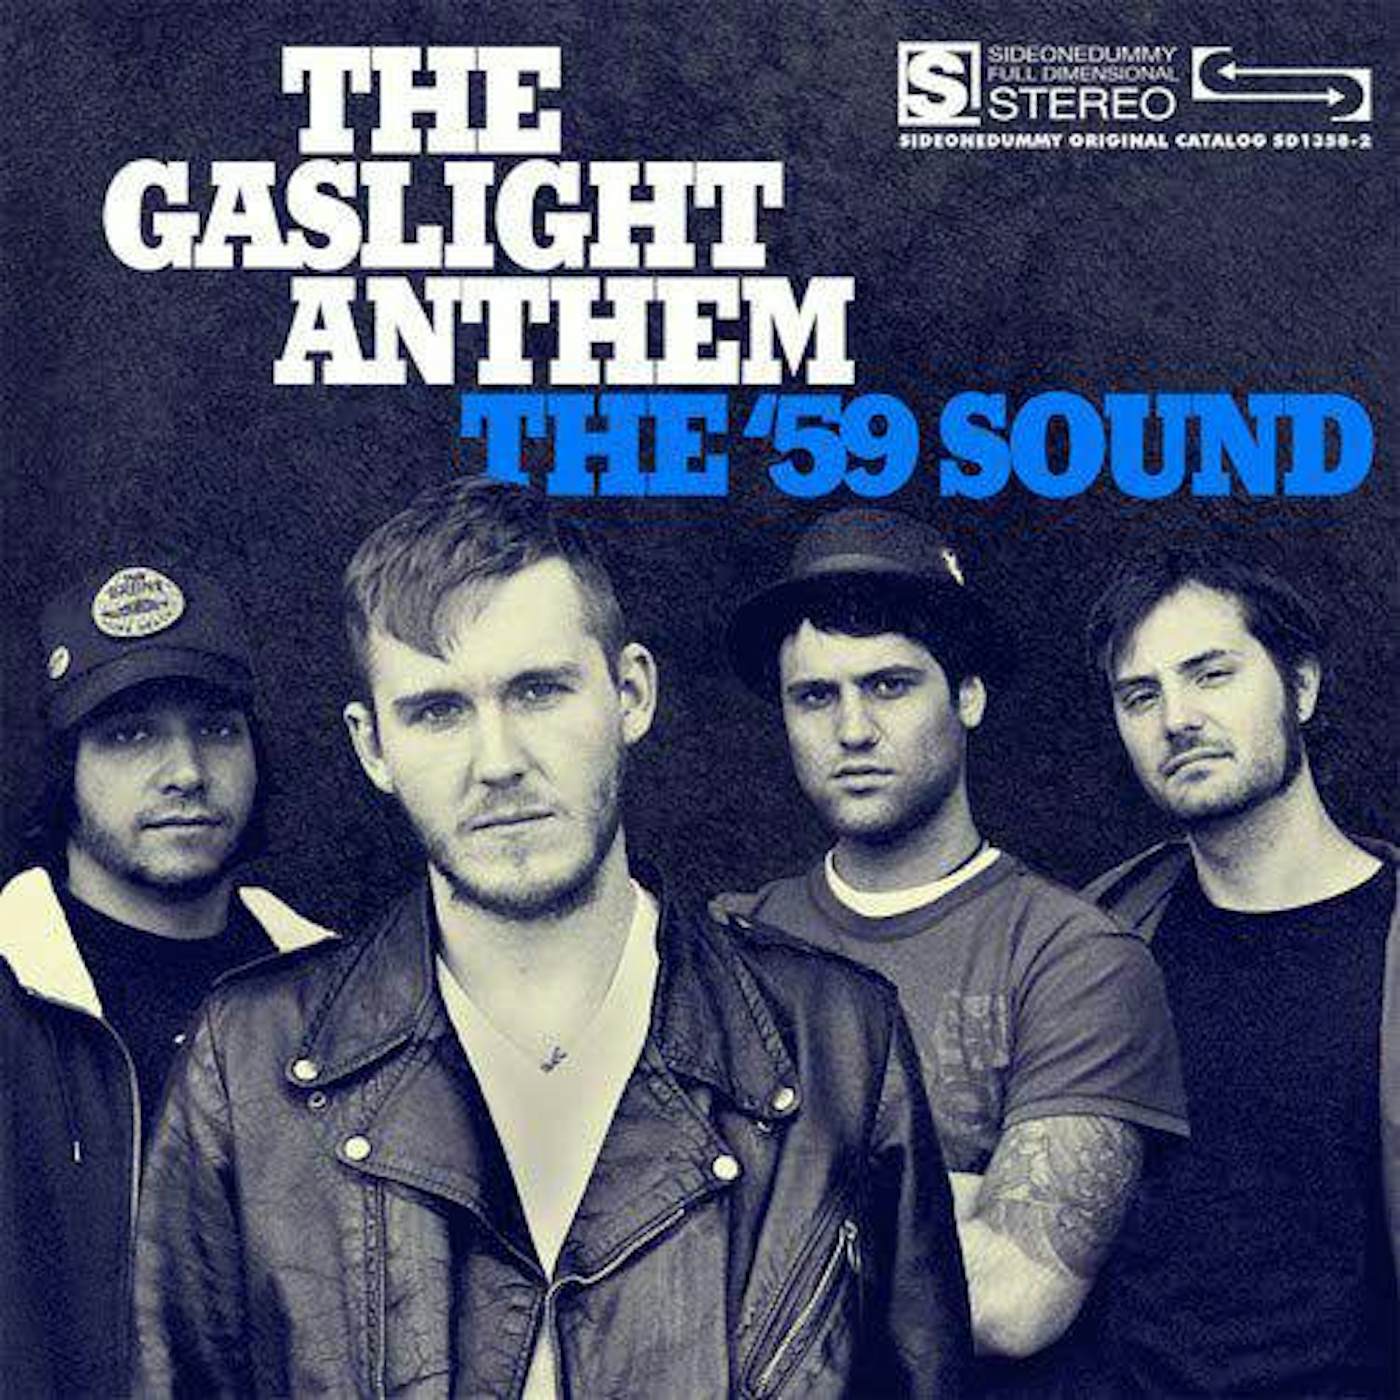 The Gaslight Anthem 59 SOUND Vinyl Record